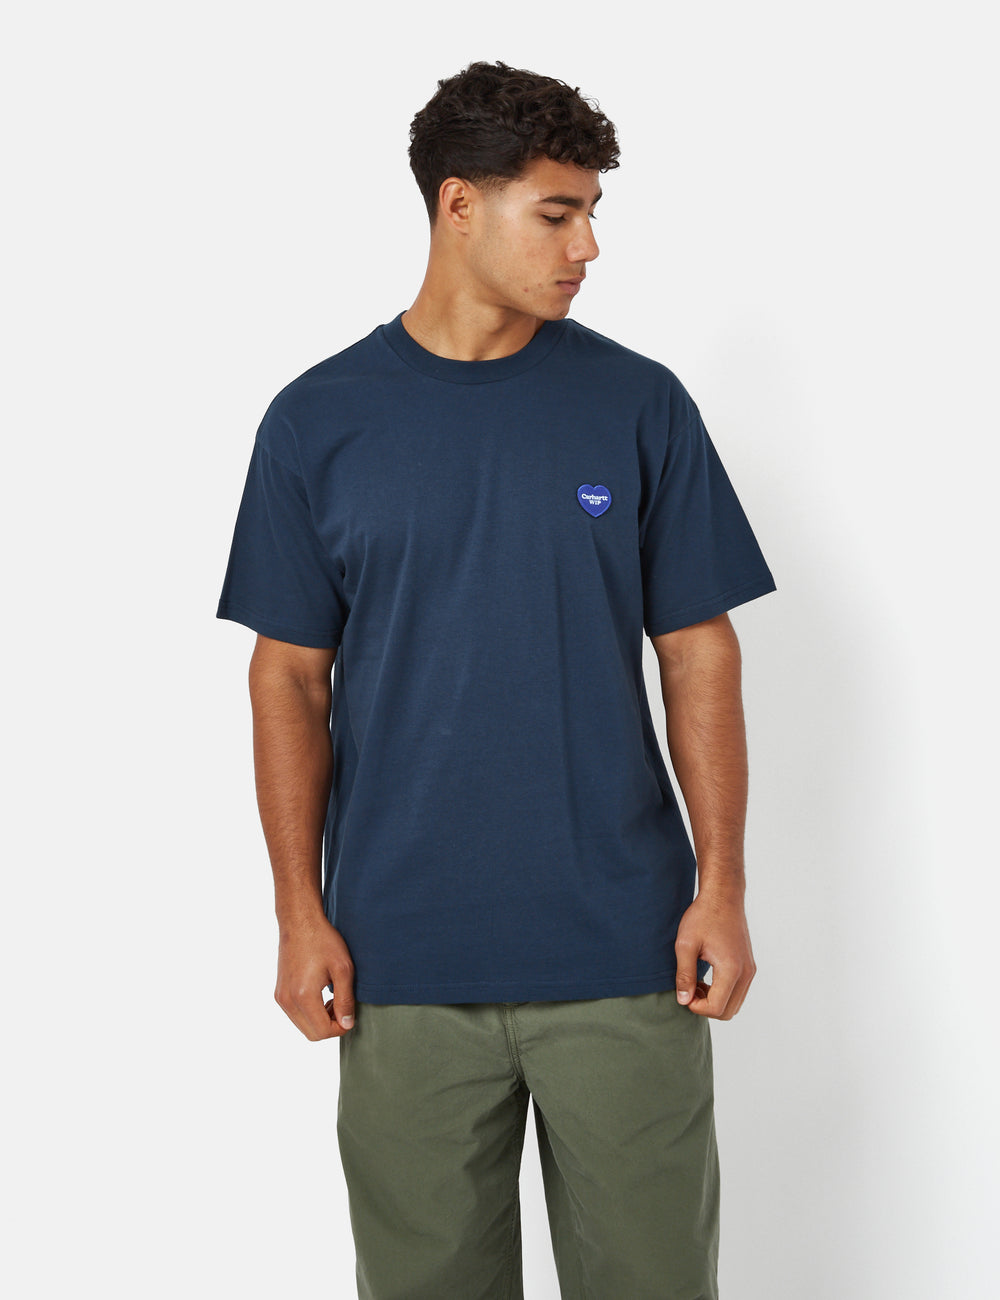 EXCESS I Heart – T-Shirt Excess. Urban URBAN - (Organic) Double Blue Carhartt-WIP